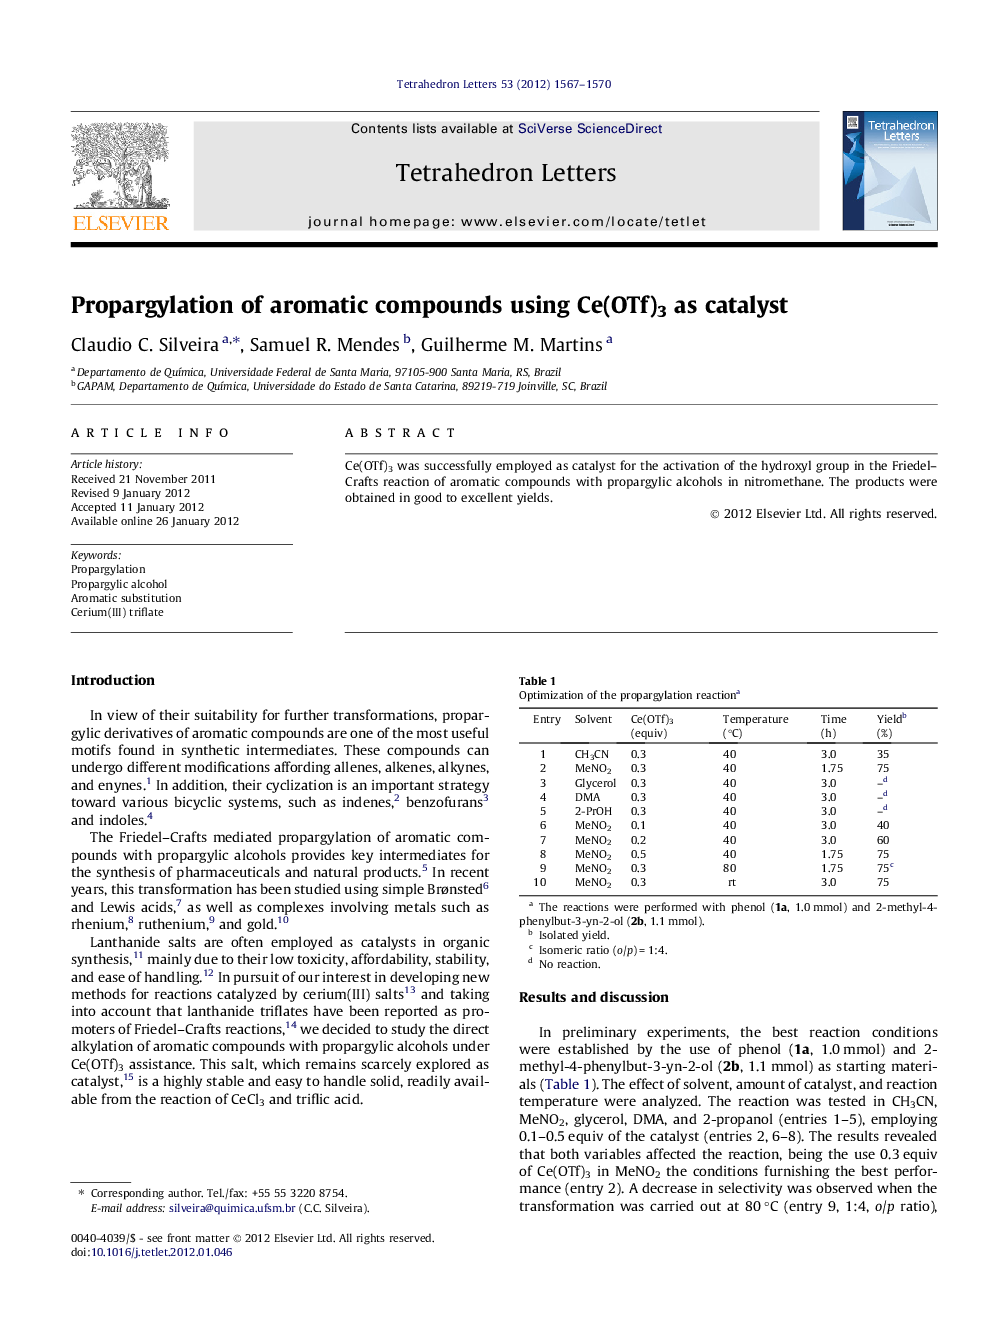 Propargylation of aromatic compounds using Ce(OTf)3 as catalyst